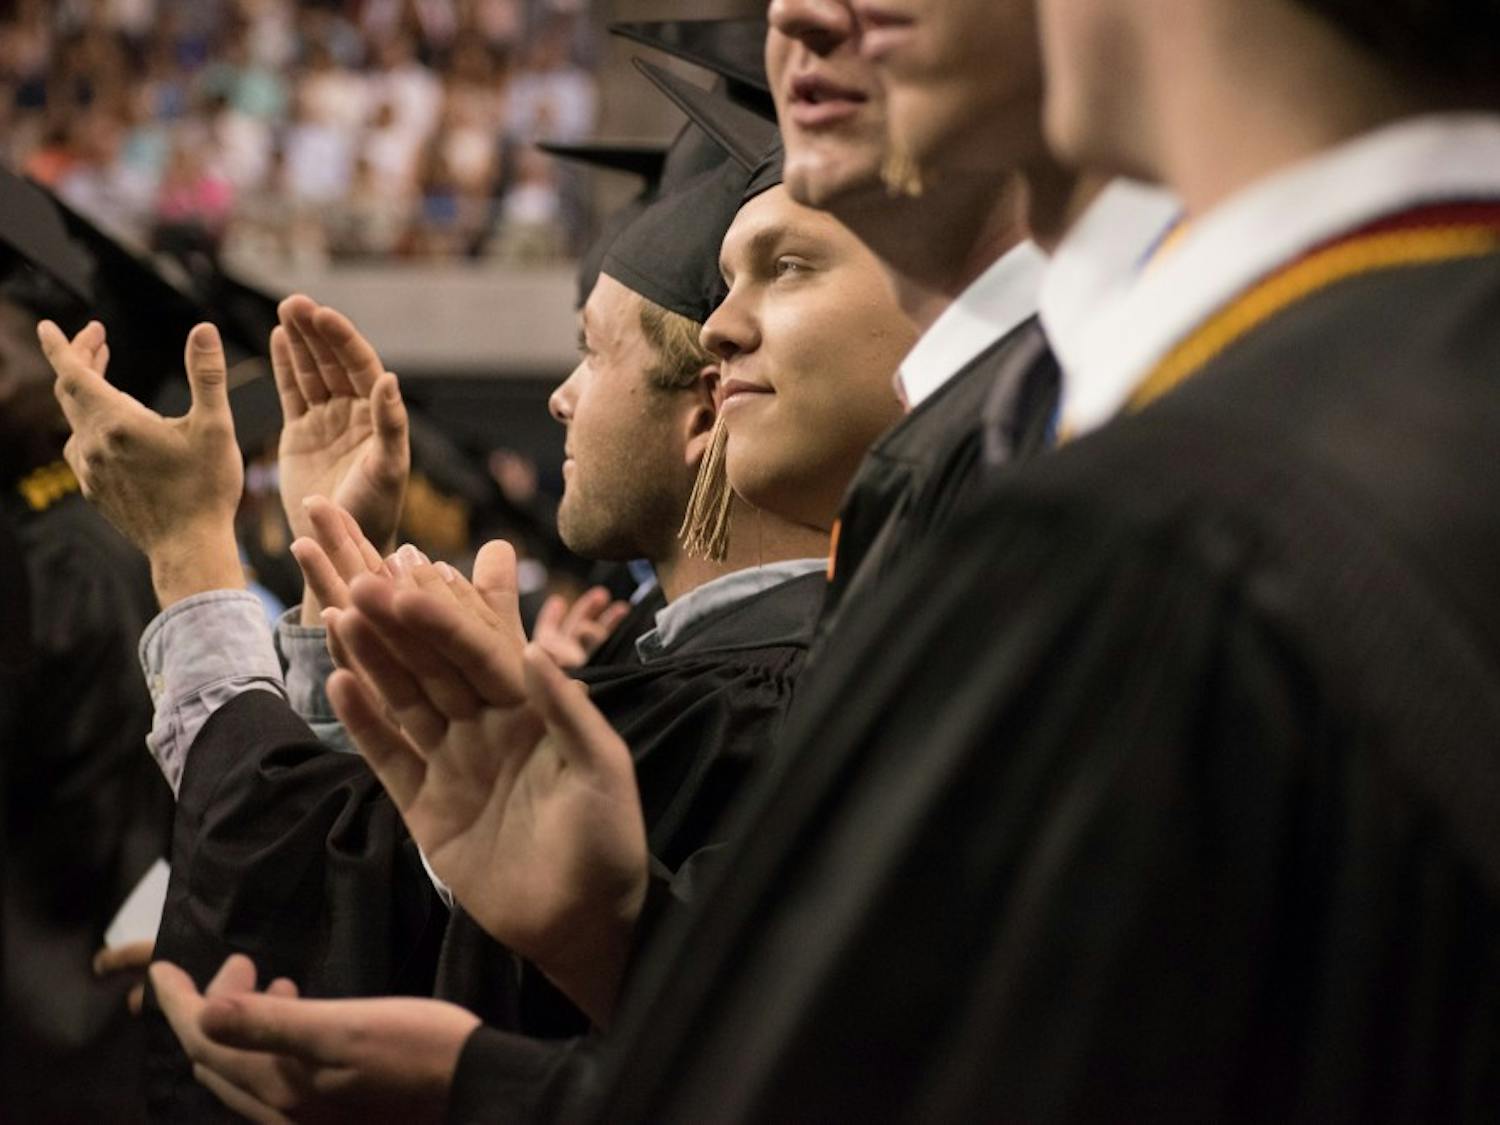 The graduates clap at the graduation ceremony on Sunday, May 6, 2018, in Auburn, Ala.